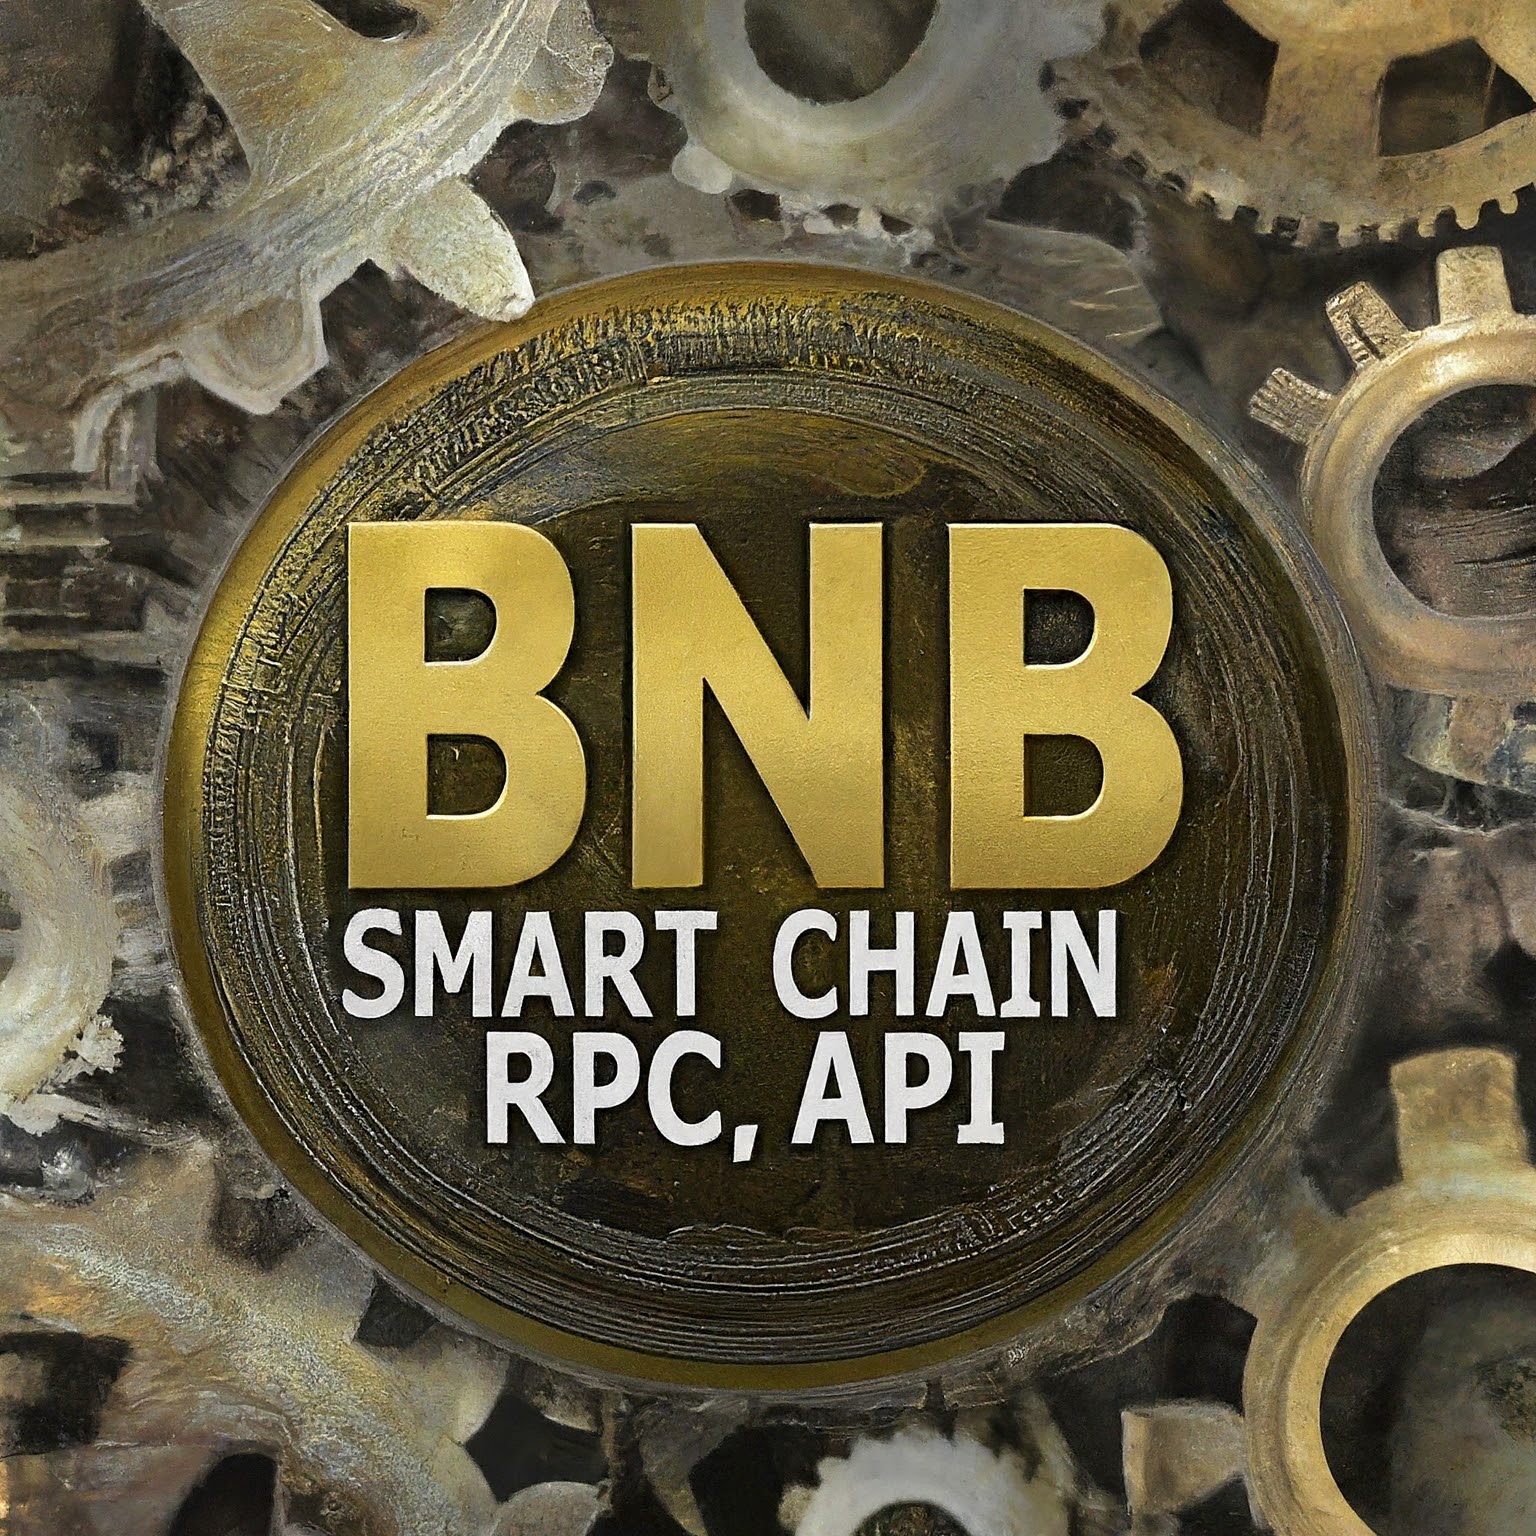 What is BNB Smart Chain RPC API?